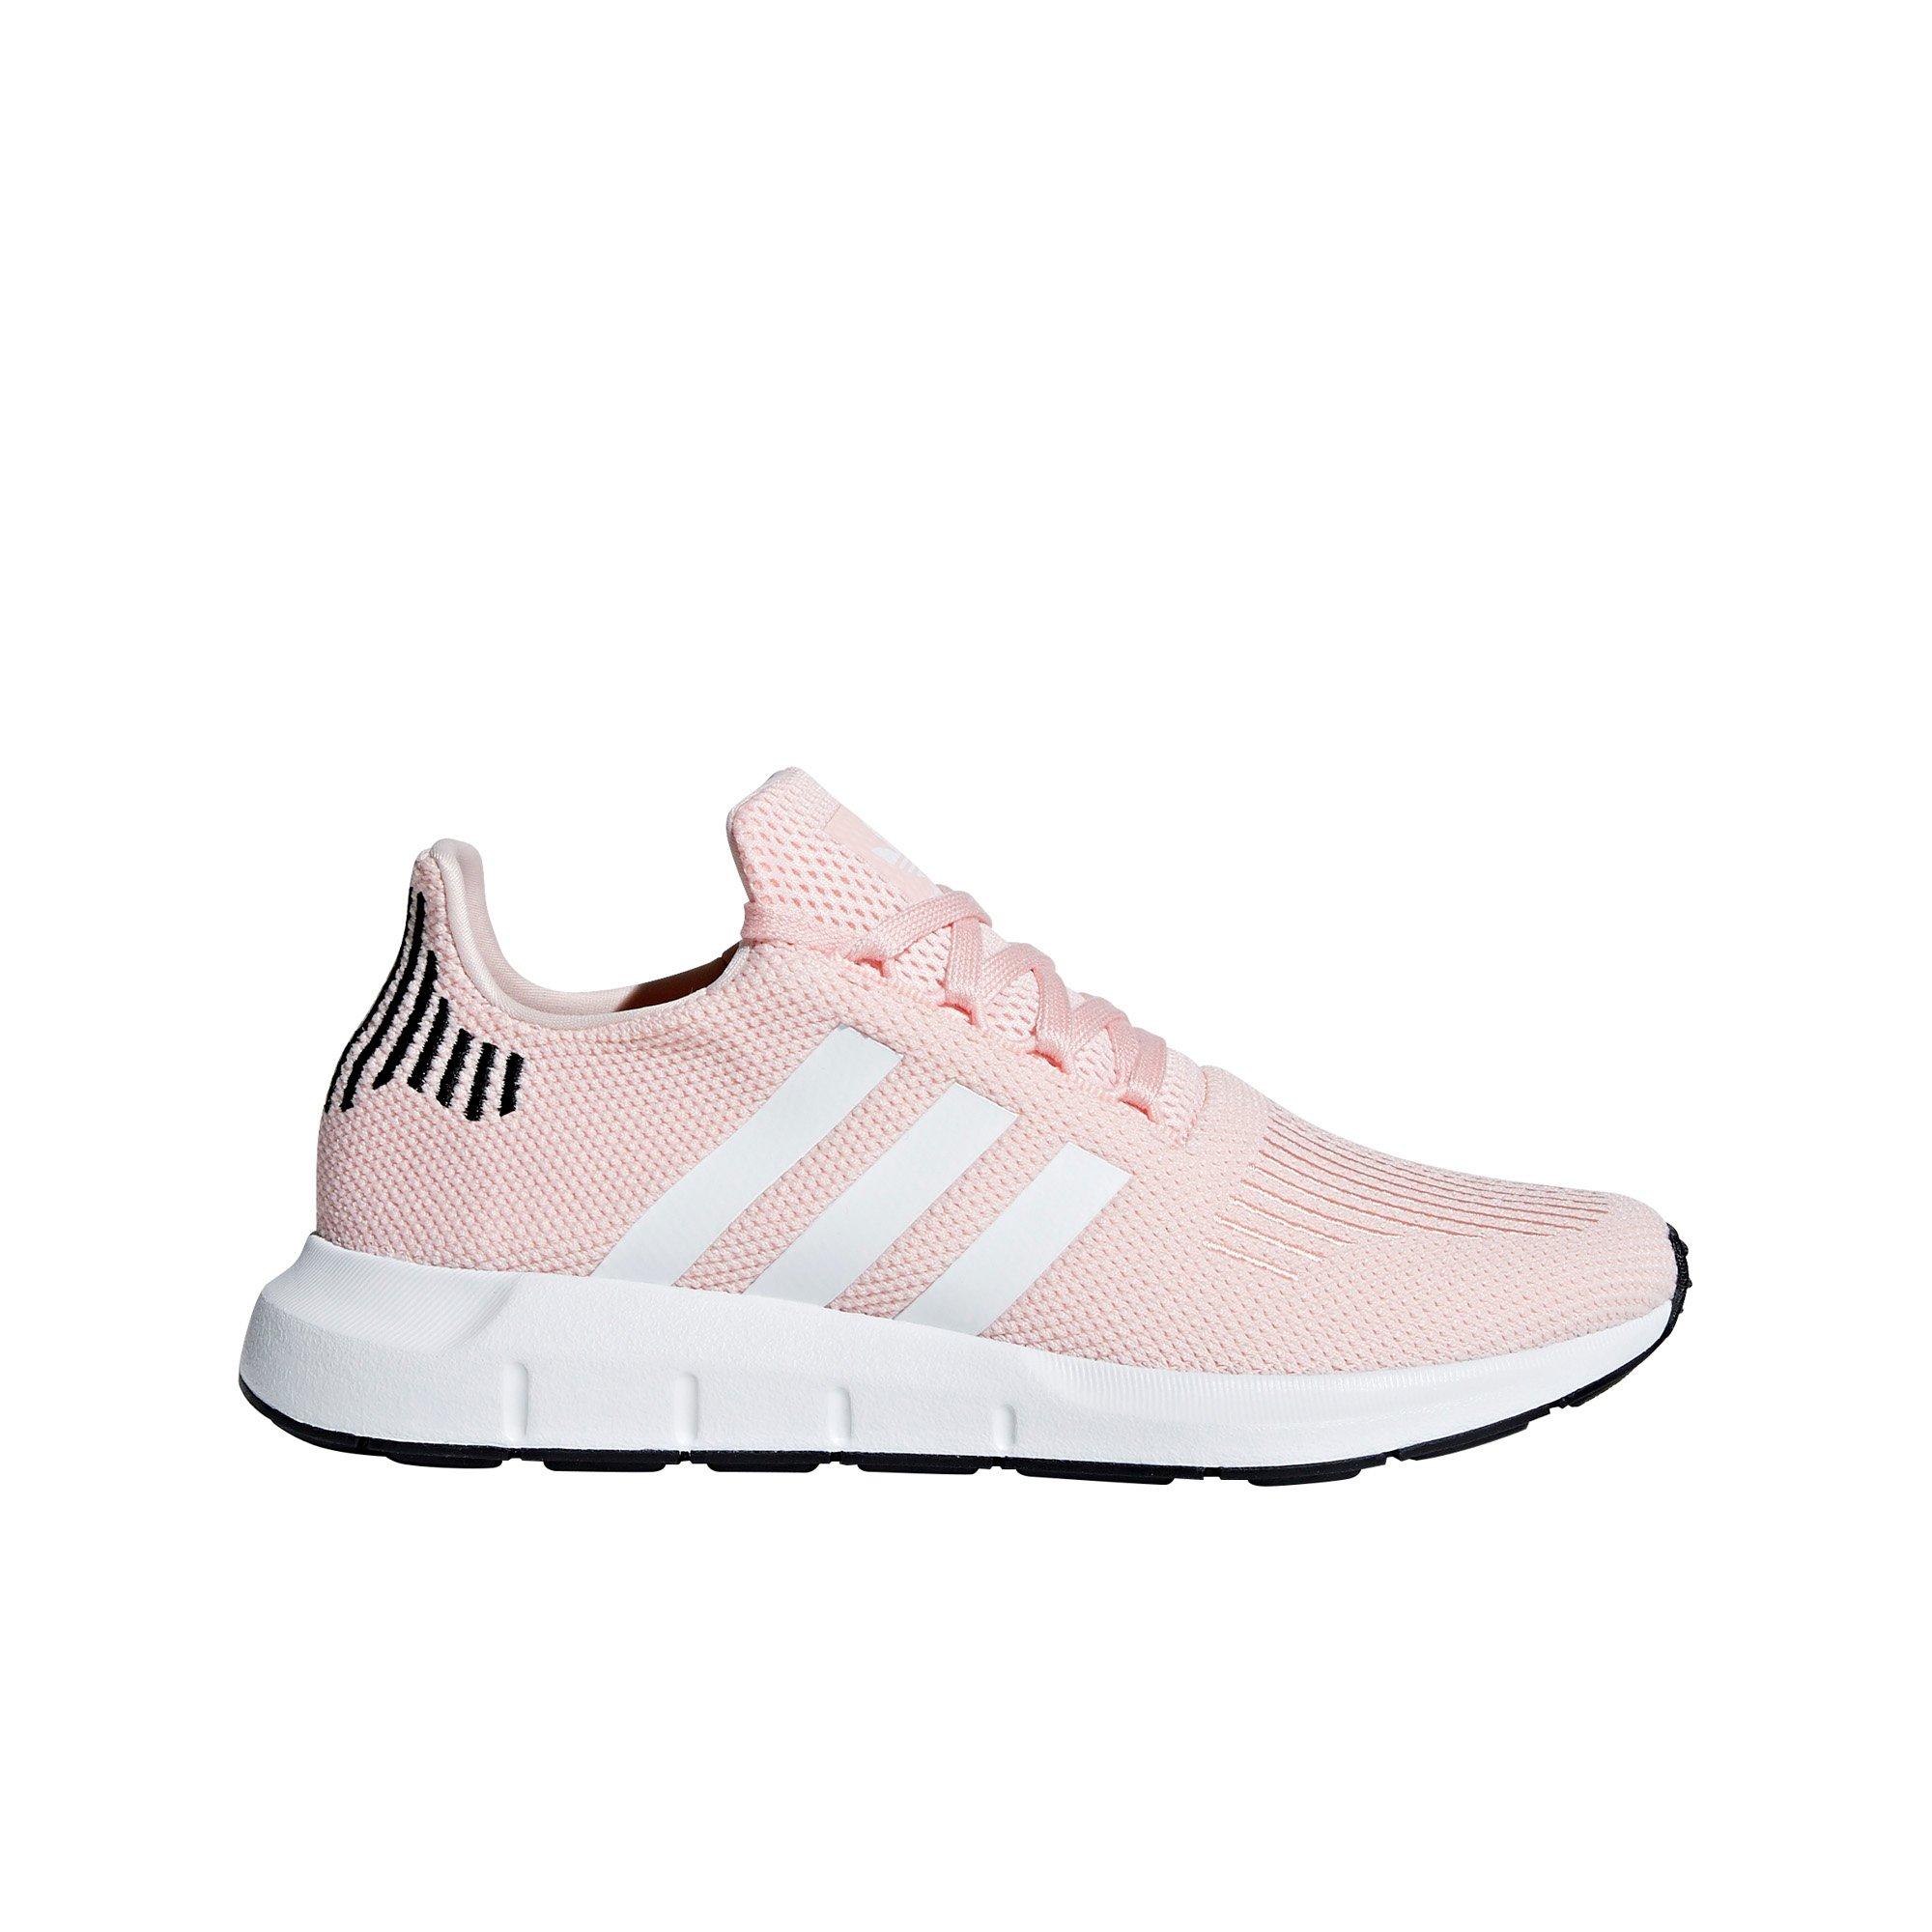 swift run shoes adidas pink